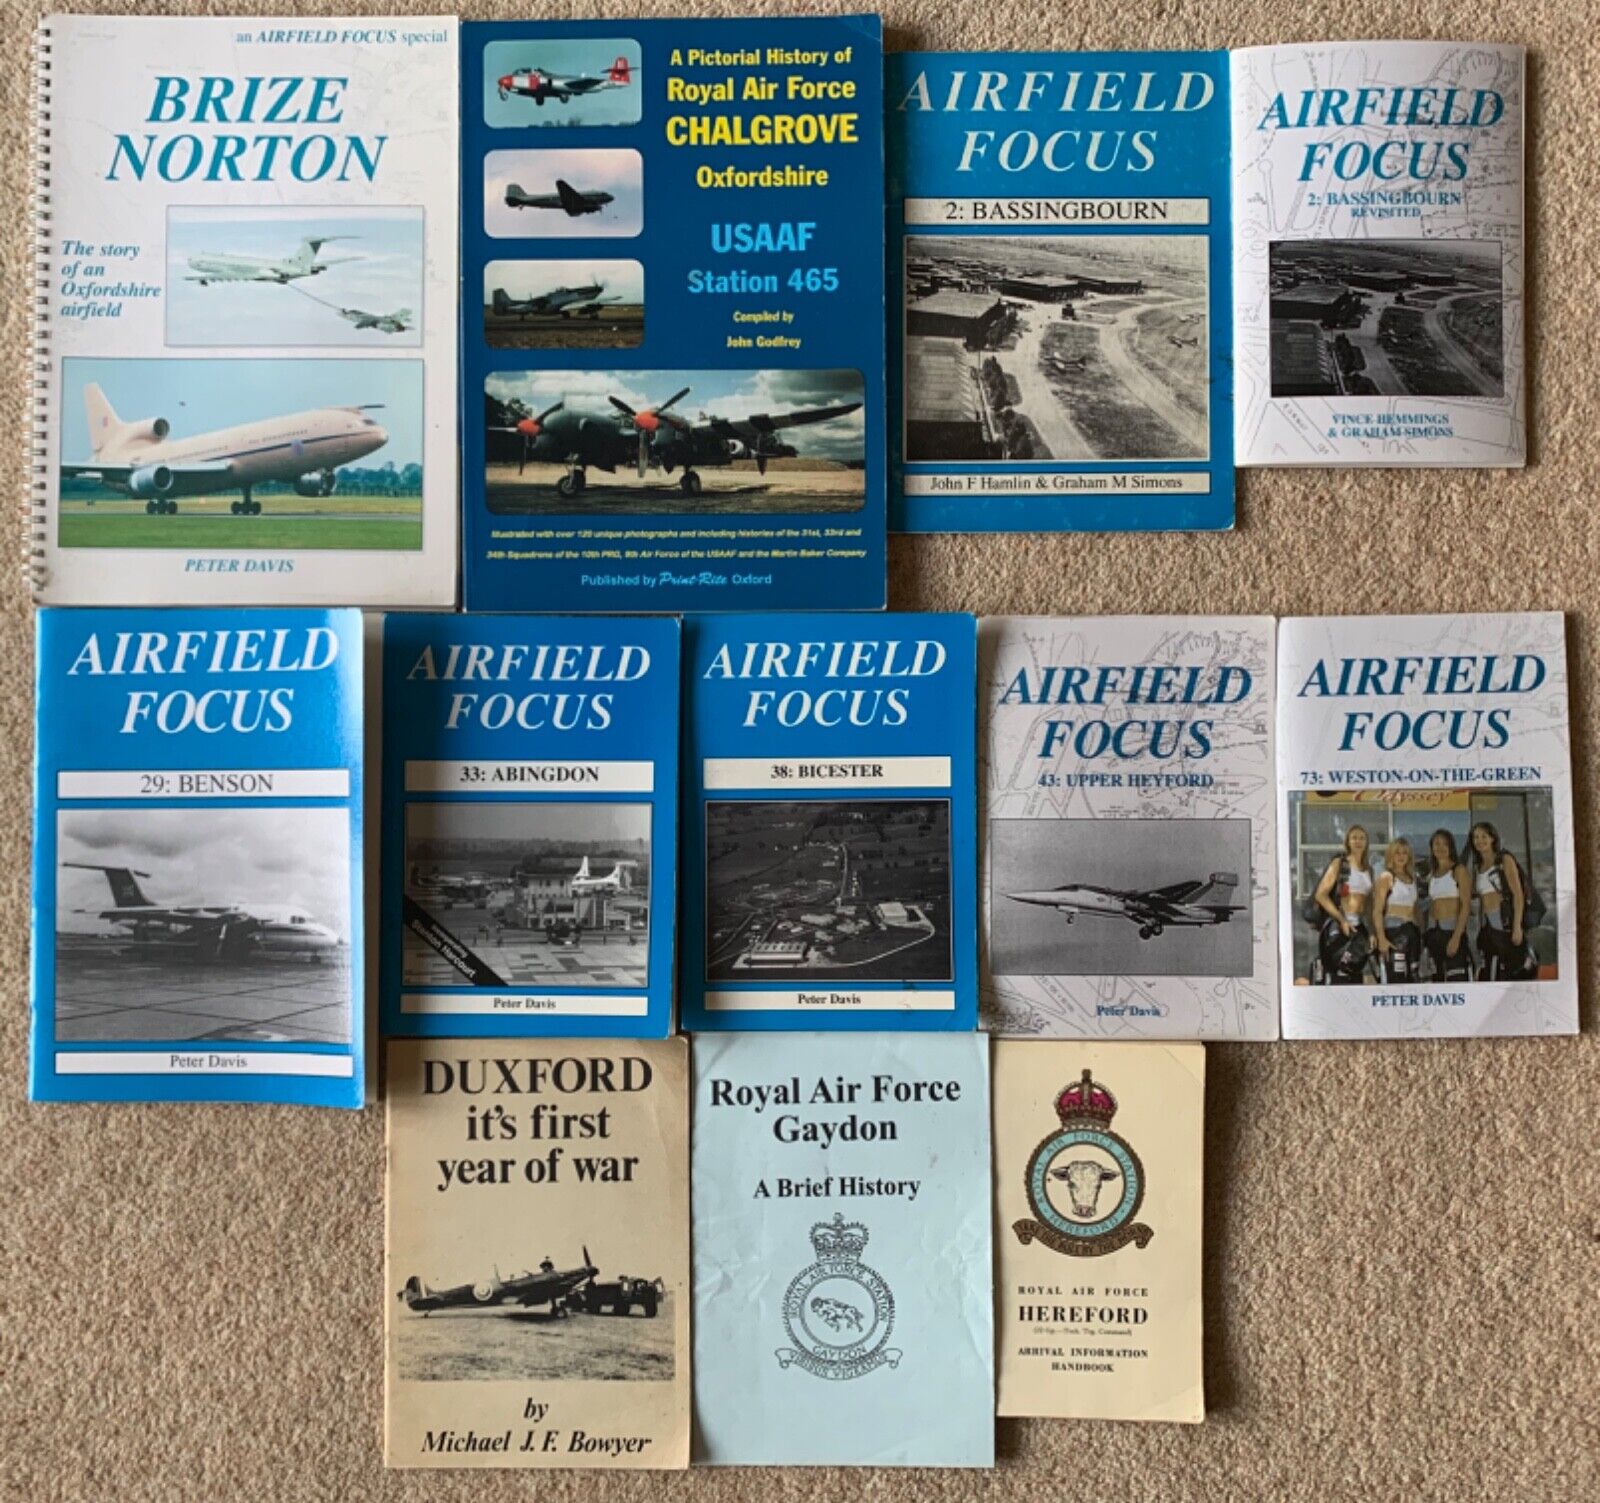 Airfield Focus et al. Peter Davis. 12 publications. Duxford, Gaydon, Hereford.